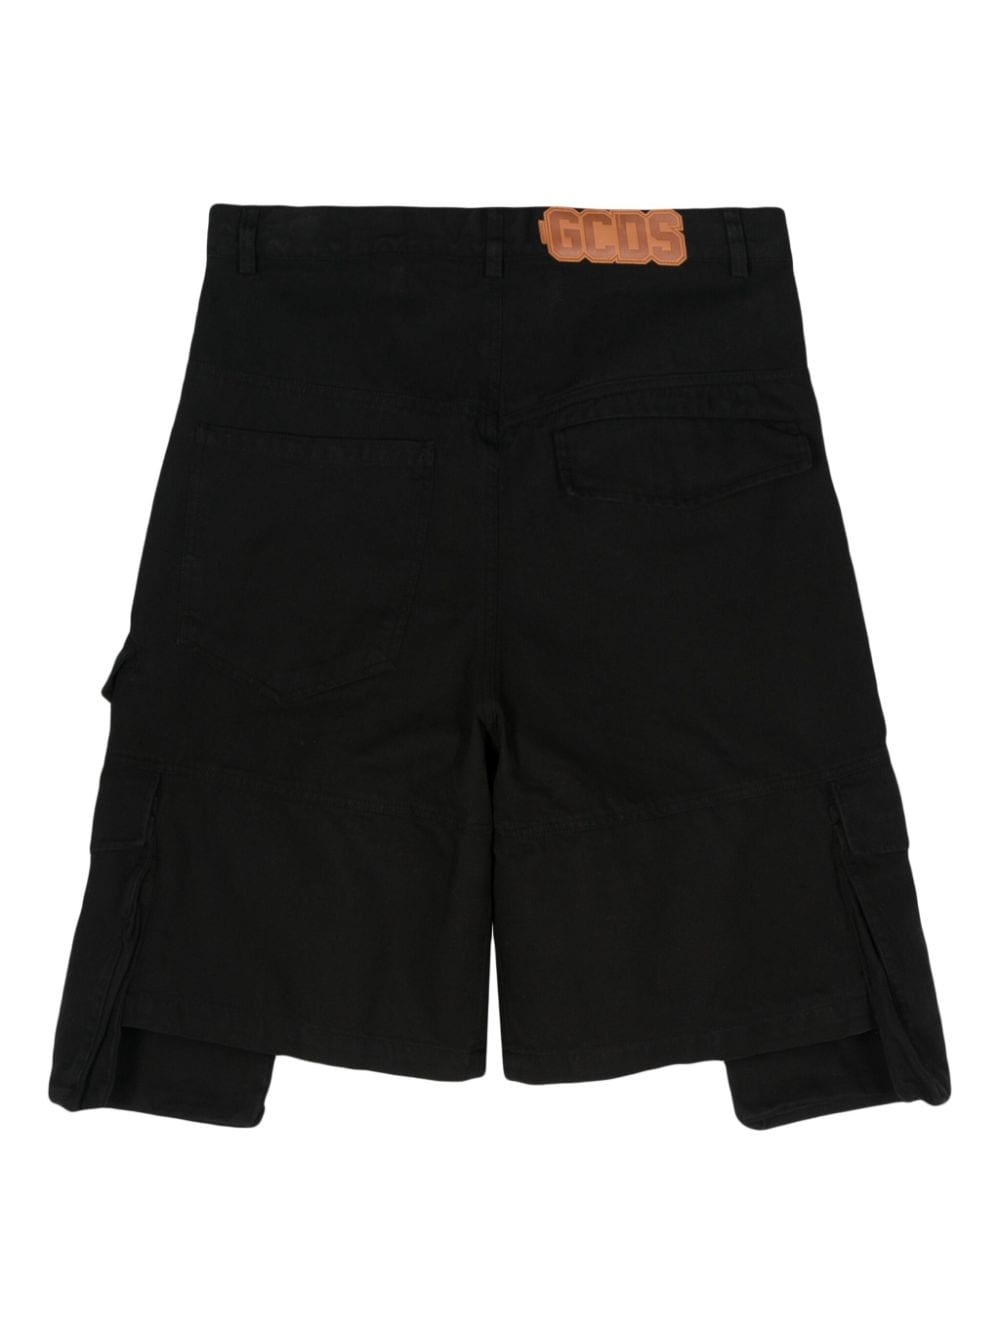 Ultracargo bermuda shorts - 2